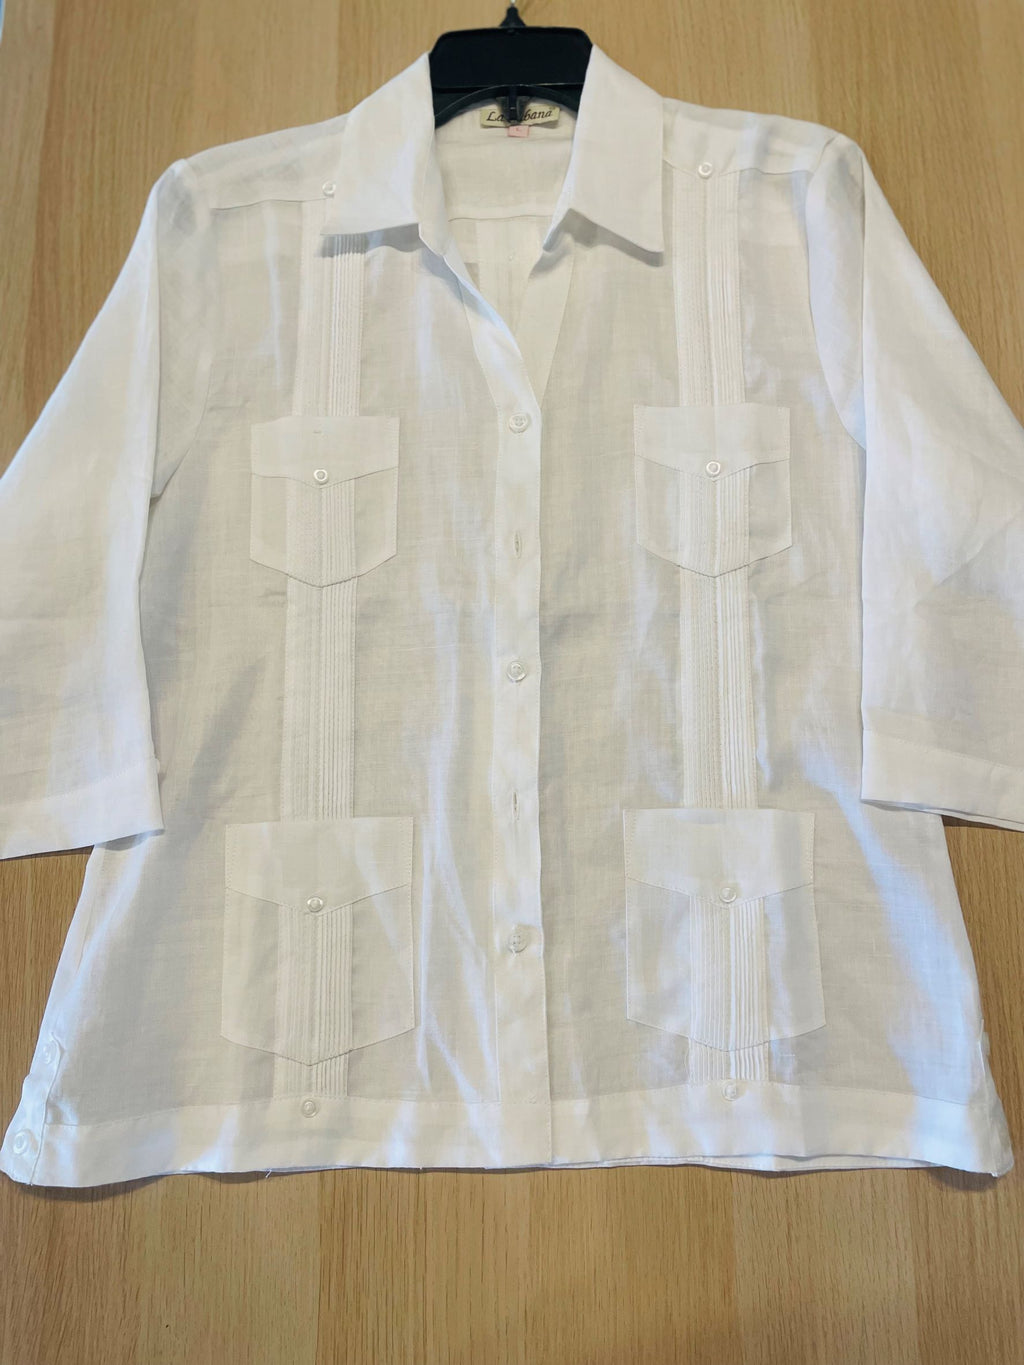 100% Linen Women's Long Sleeve Shirt, White